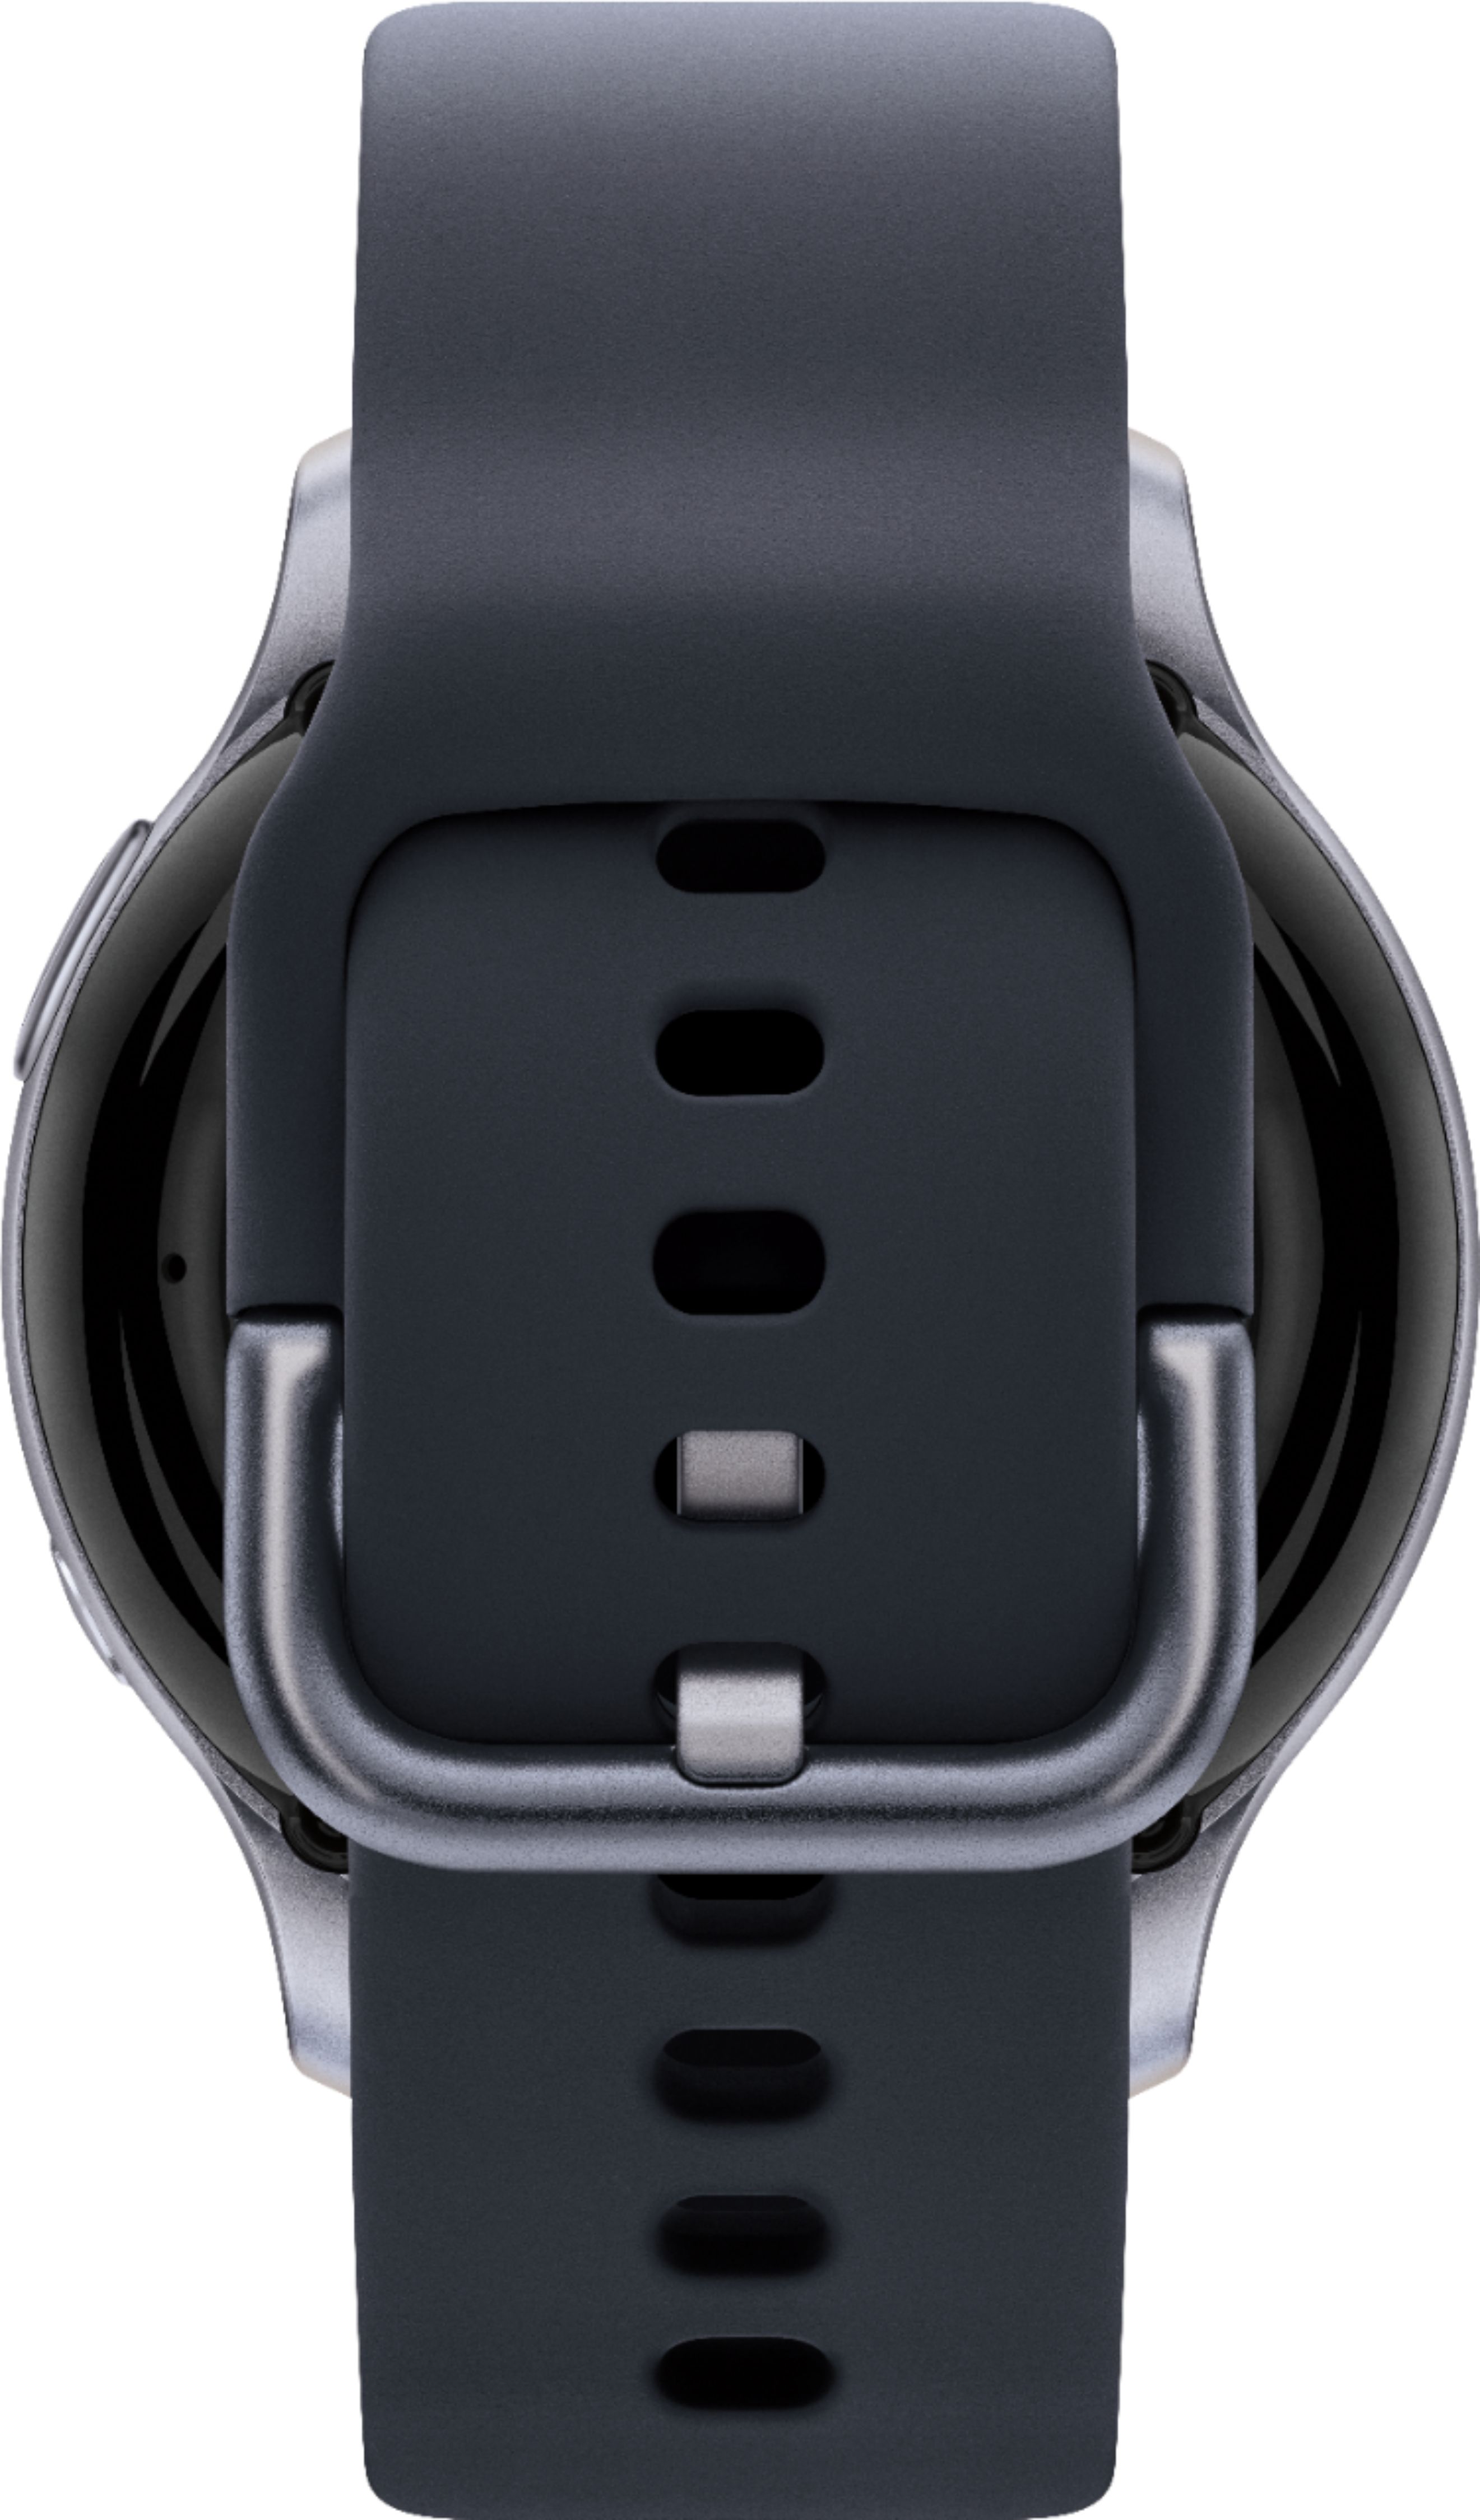 Back View: Samsung - Geek Squad Certified Refurbished Galaxy Watch Active2 Smartwatch 40mm Aluminum - Aqua Black